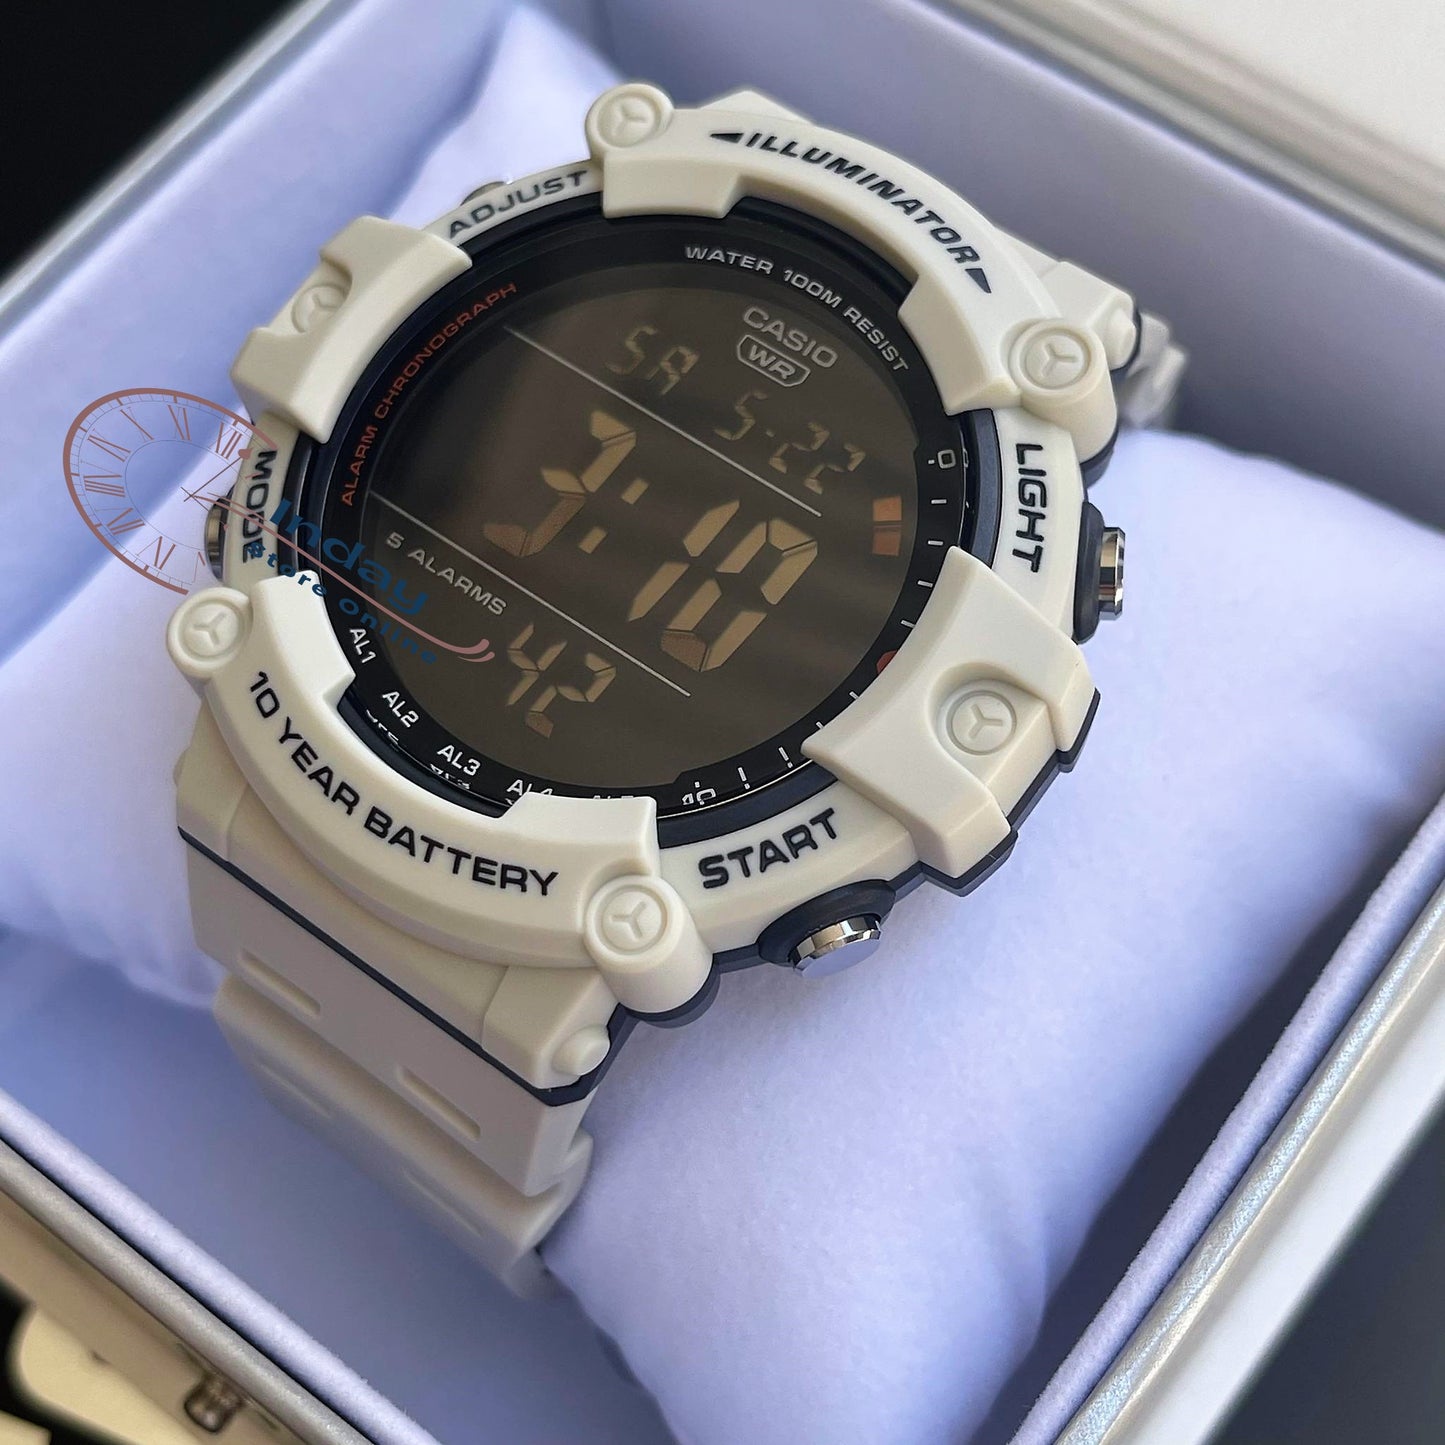 Casio Digital Men's Watch AE-1500WH-8B2